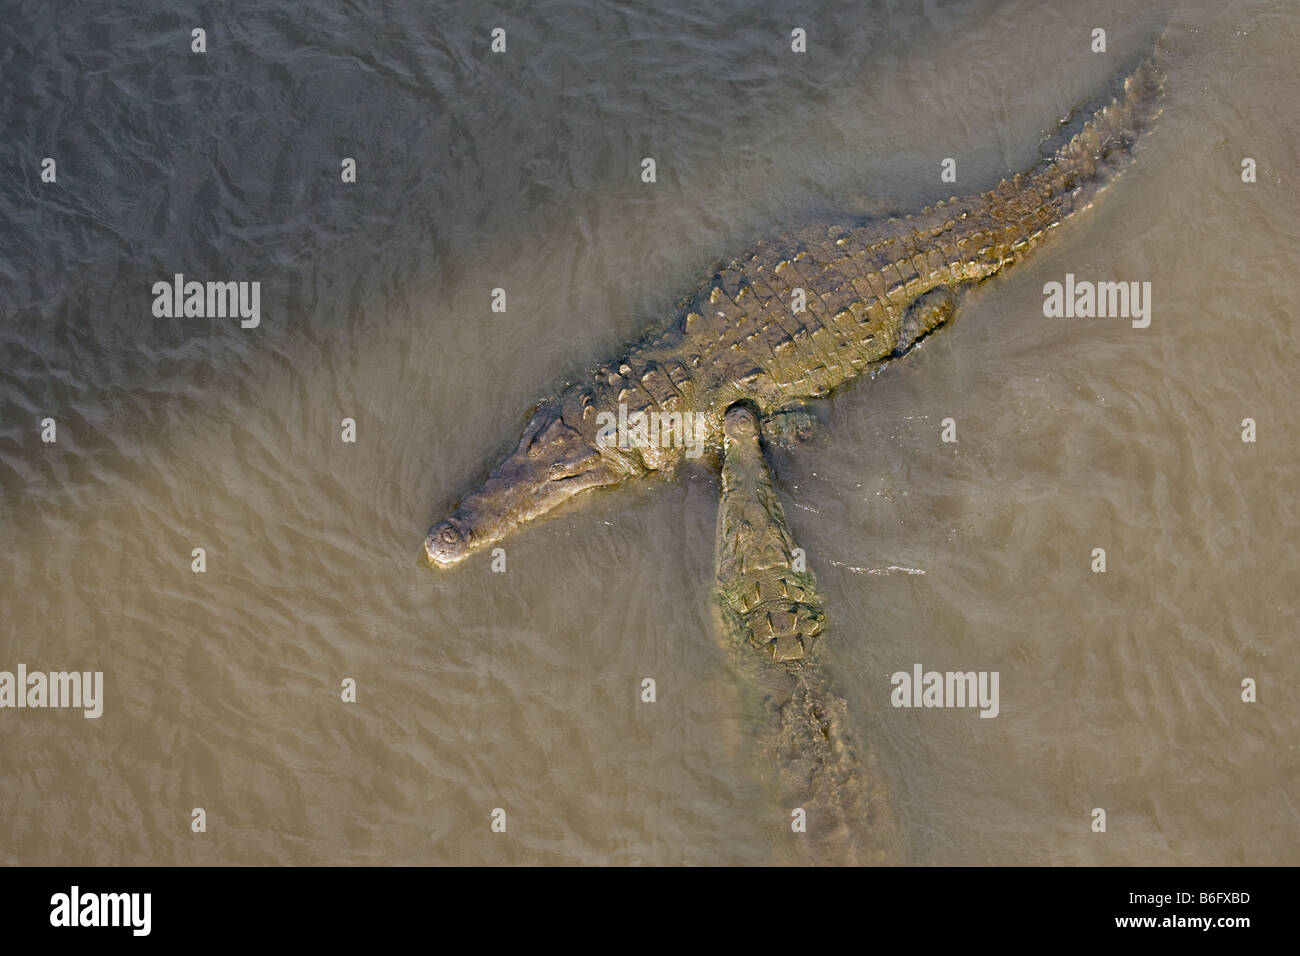 Two large American crocodiles Crocodylus acutus in the Tarcoles river in Costa Rica Stock Photo